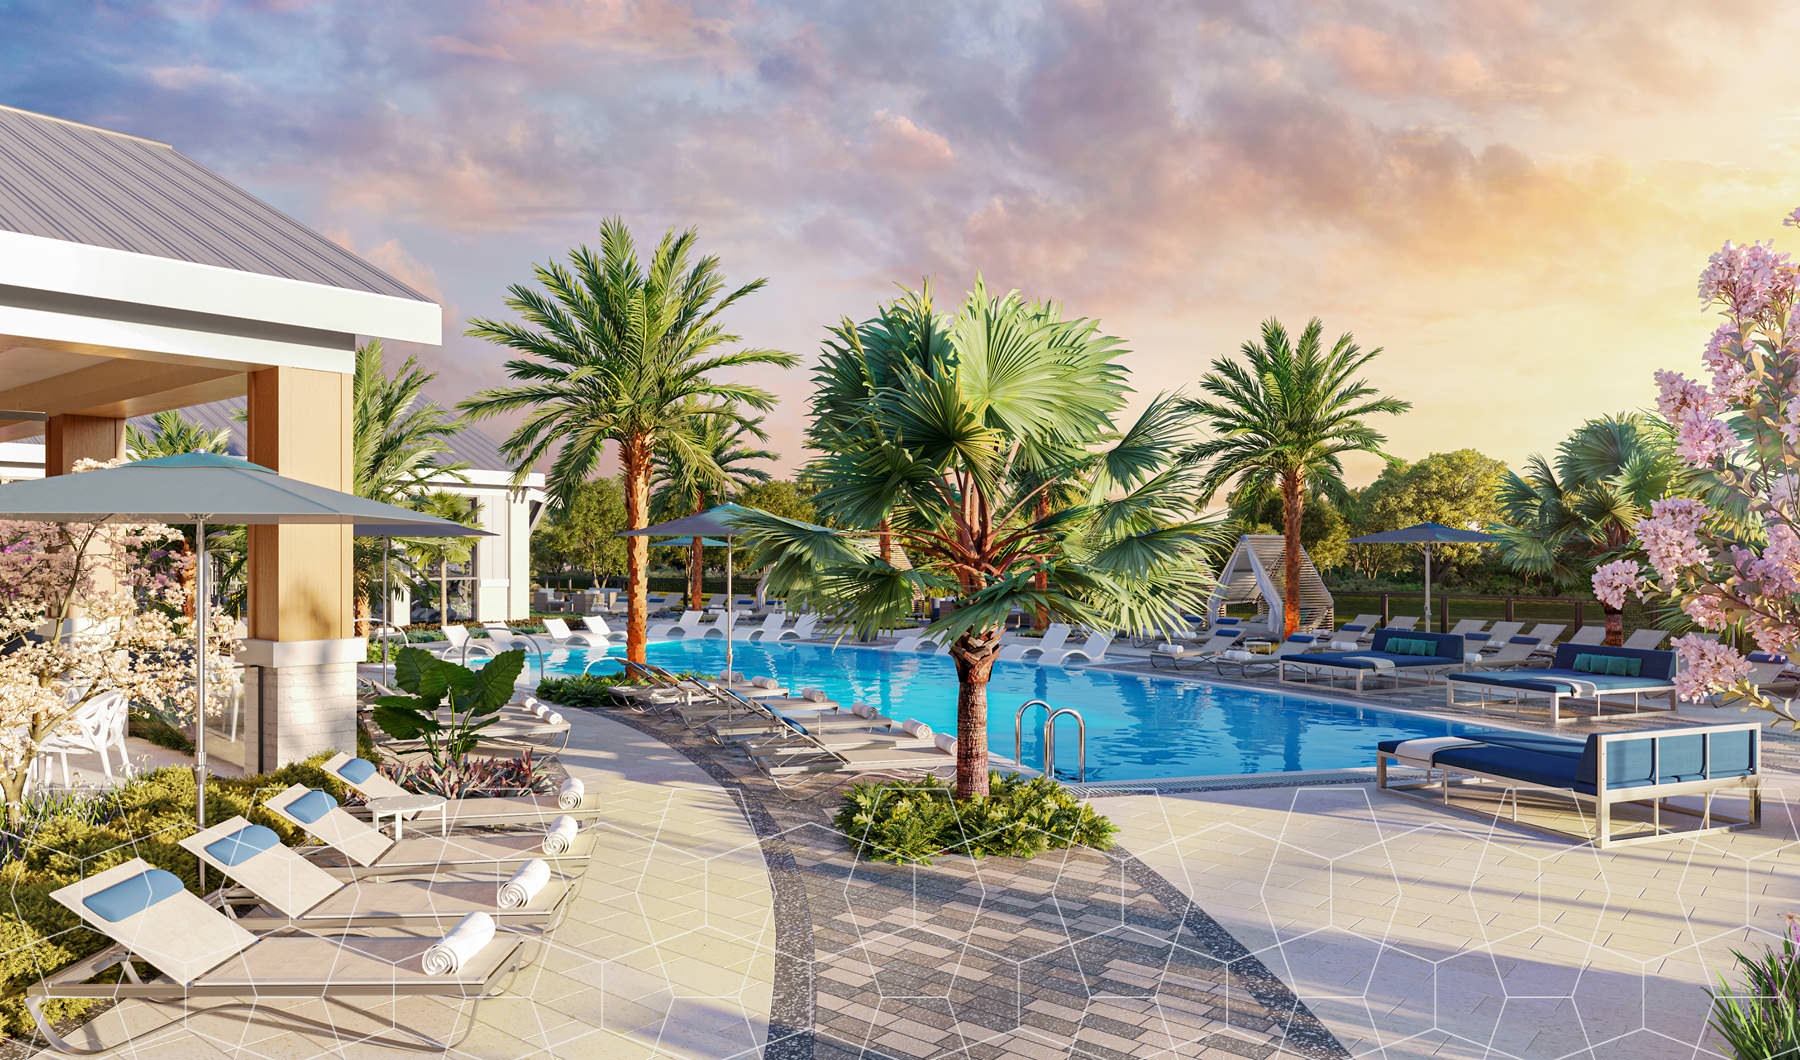 Aventon Lana's Resort-Style Pool